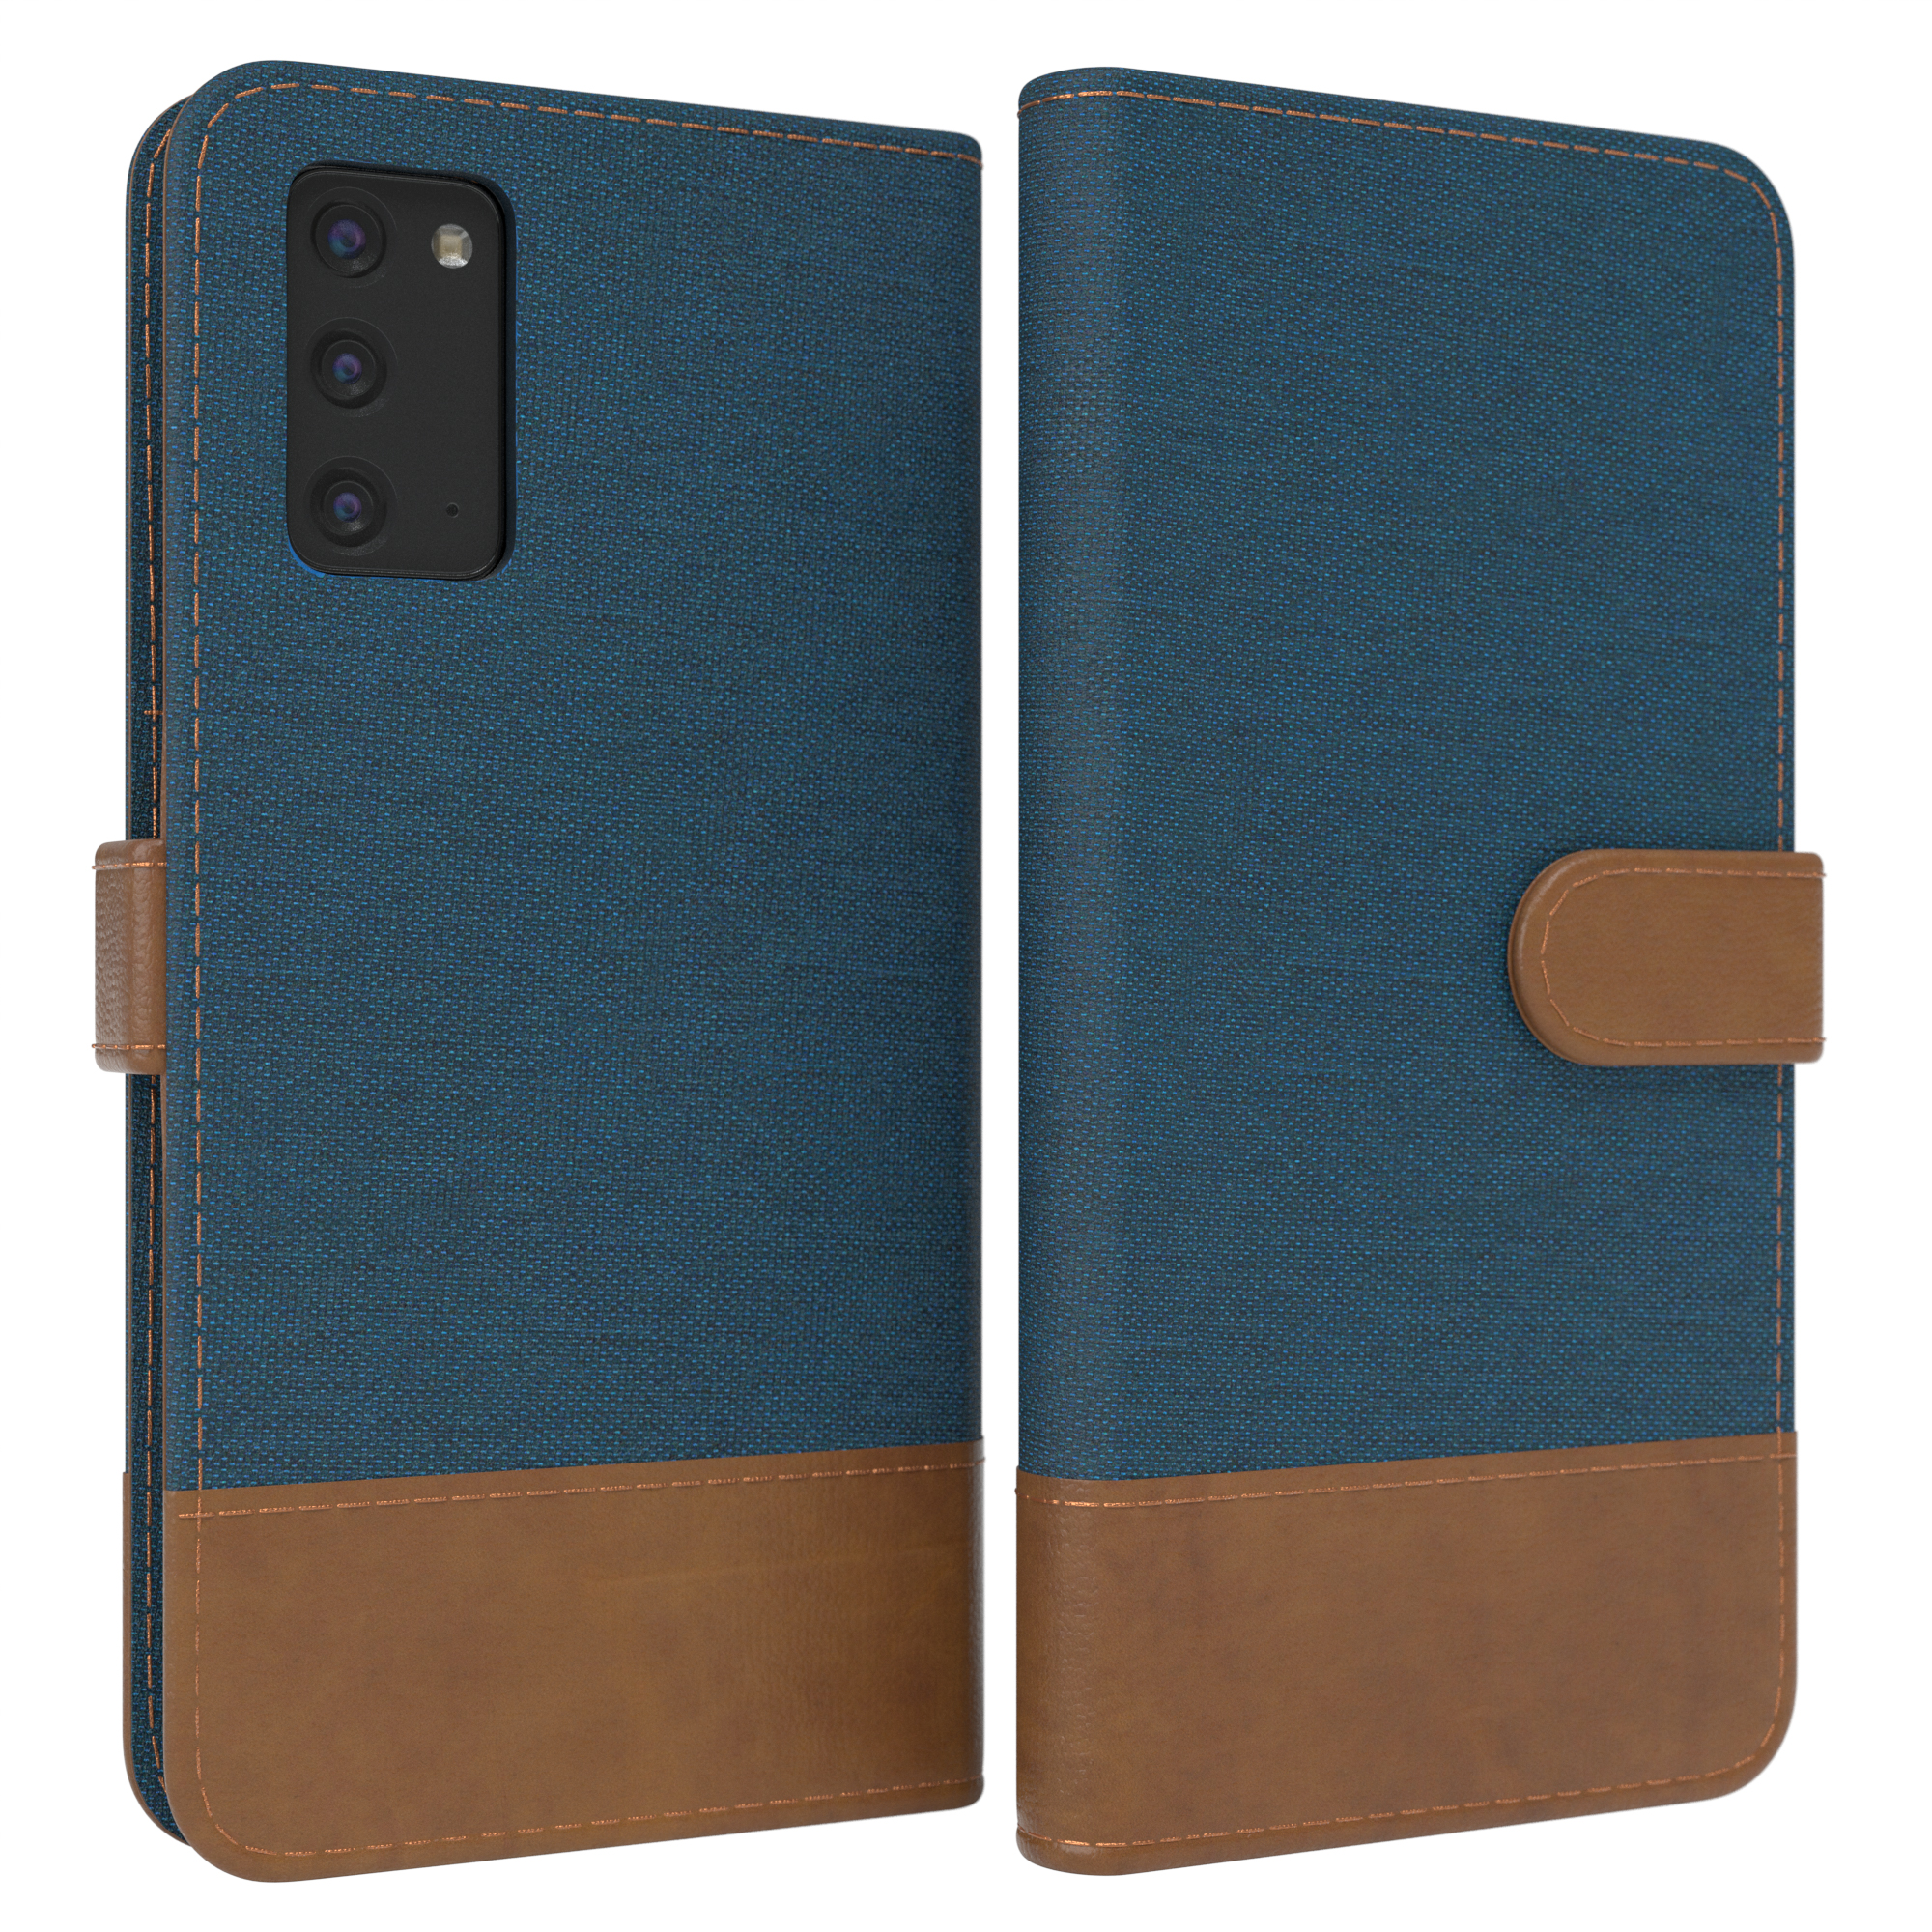 EAZY CASE / Note Samsung, Klapphülle Kartenfach, Bookcover, Bookstyle Blau Jeans 20 20 5G, mit Galaxy Note